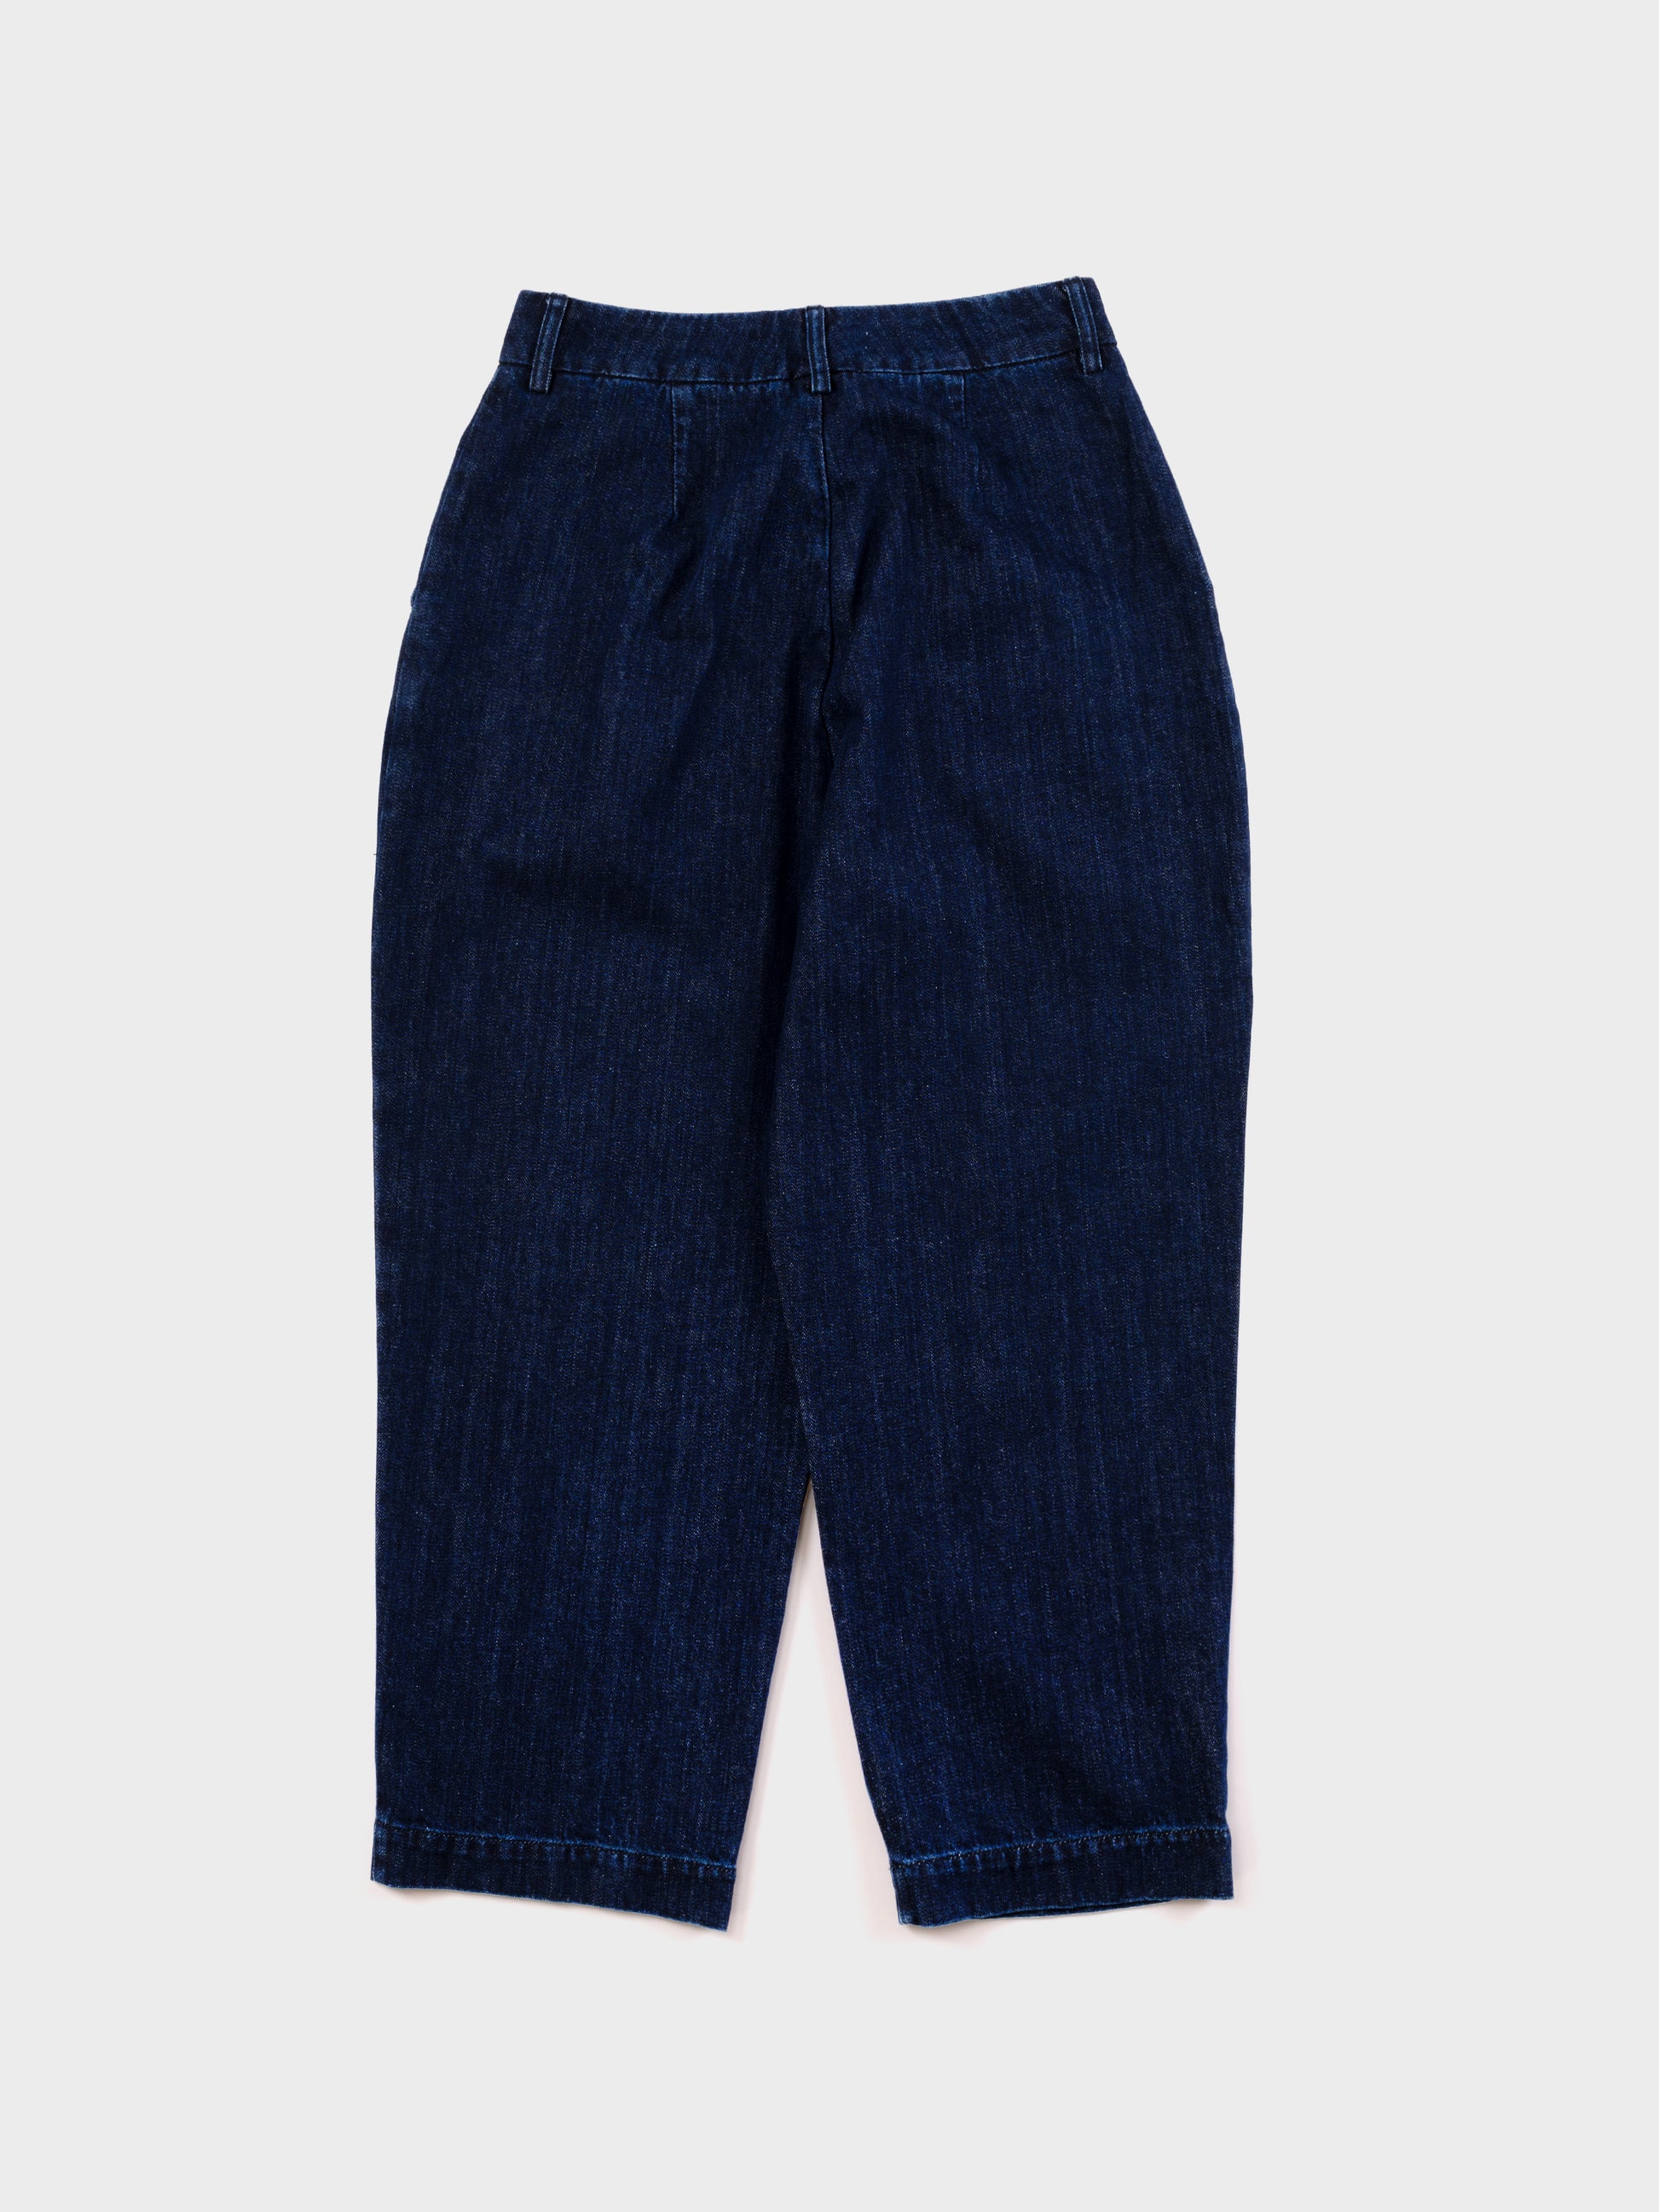 YMC Market Trouser - Indigo Denim Trouser